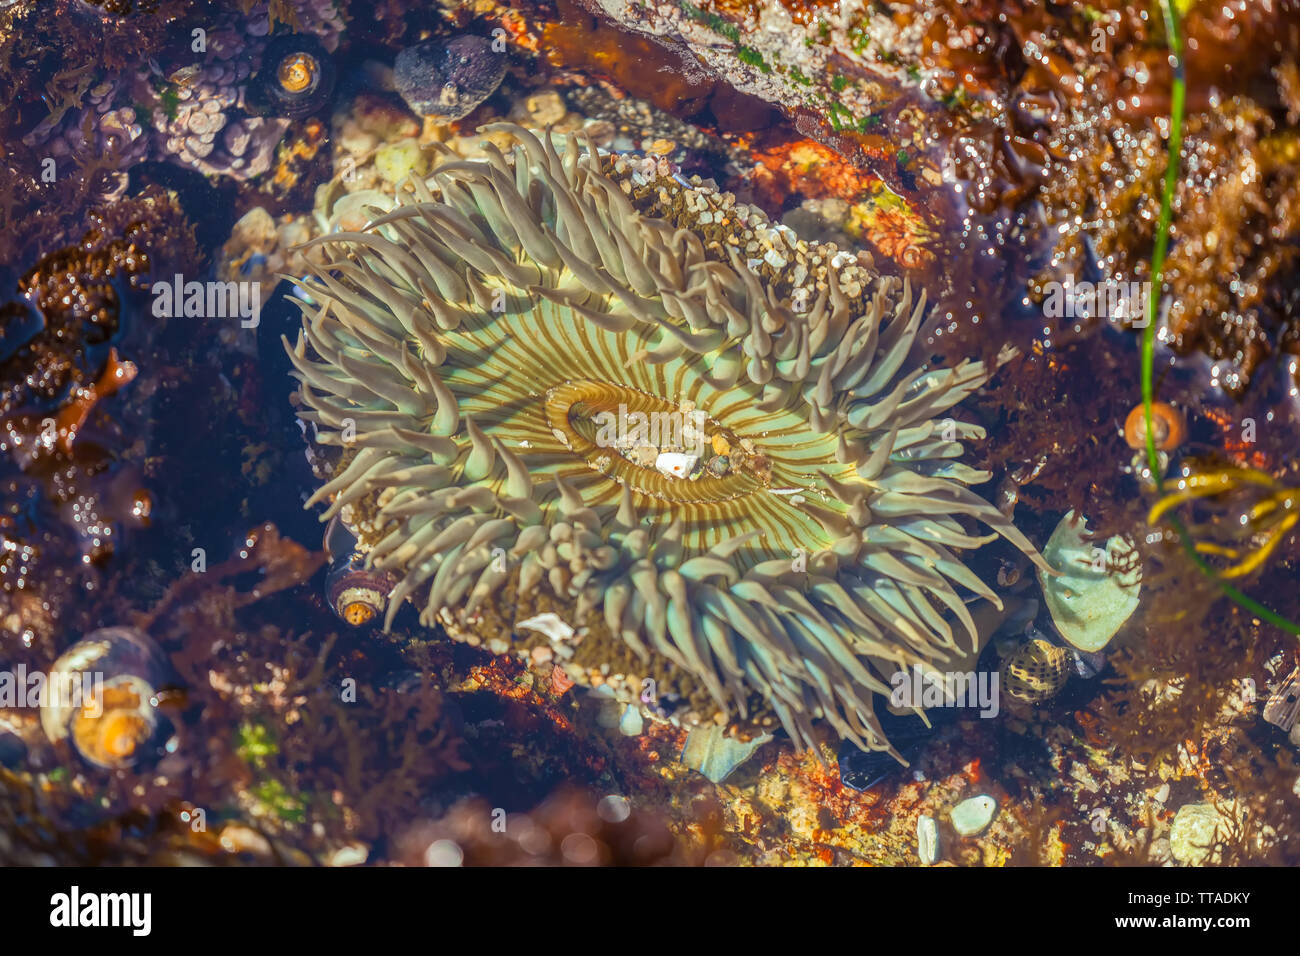 Starburst anemone (Anthopleura sola), Montery Peninsula, California, United States. Stock Photo